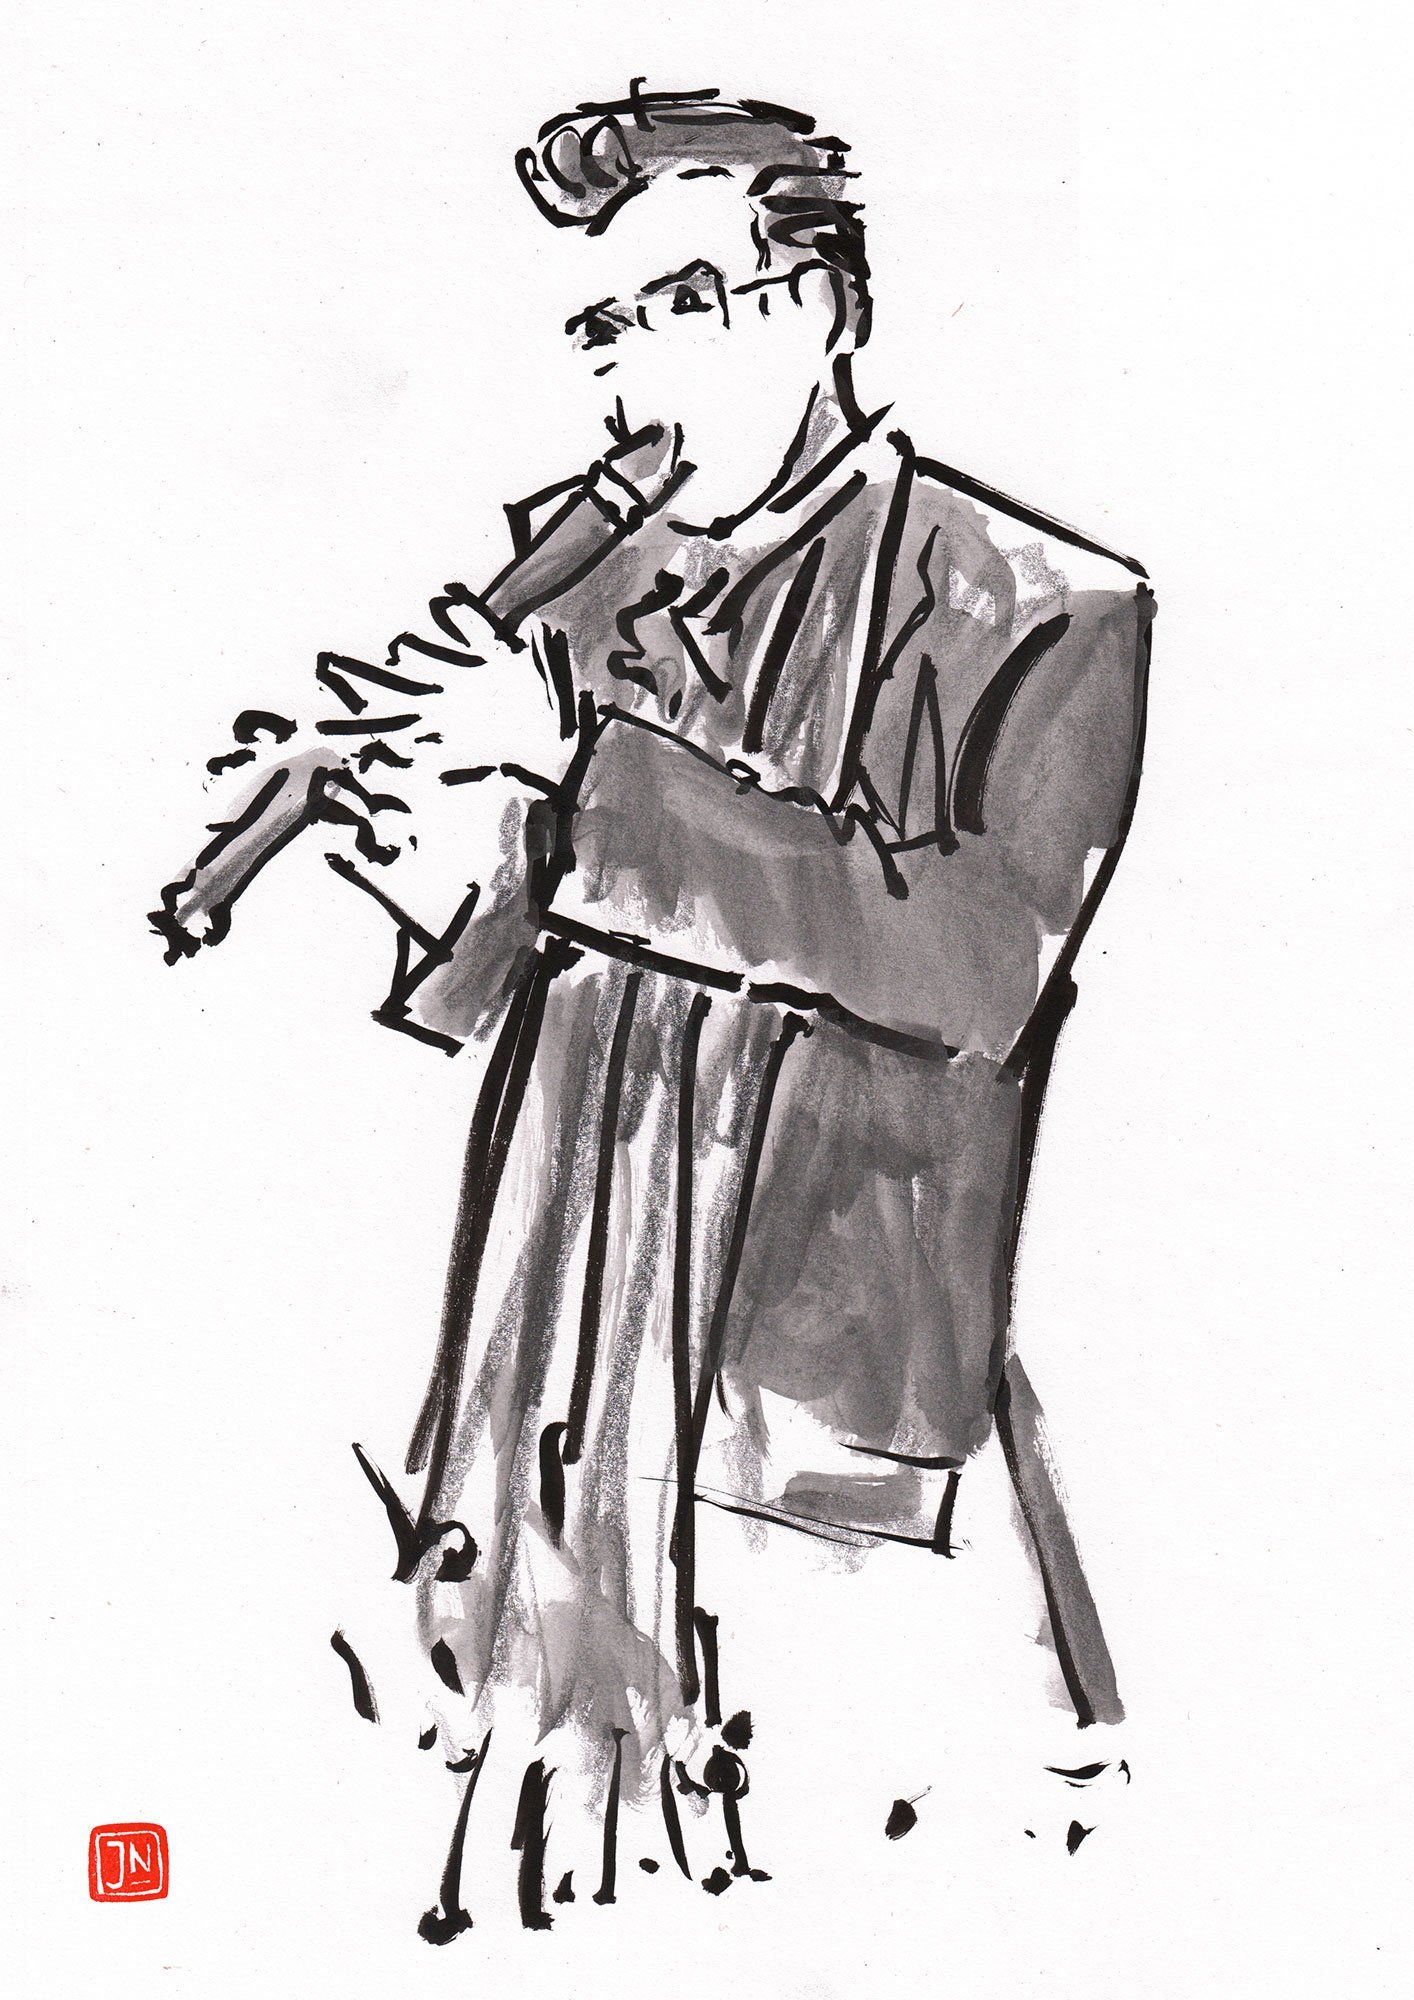 Flute musician